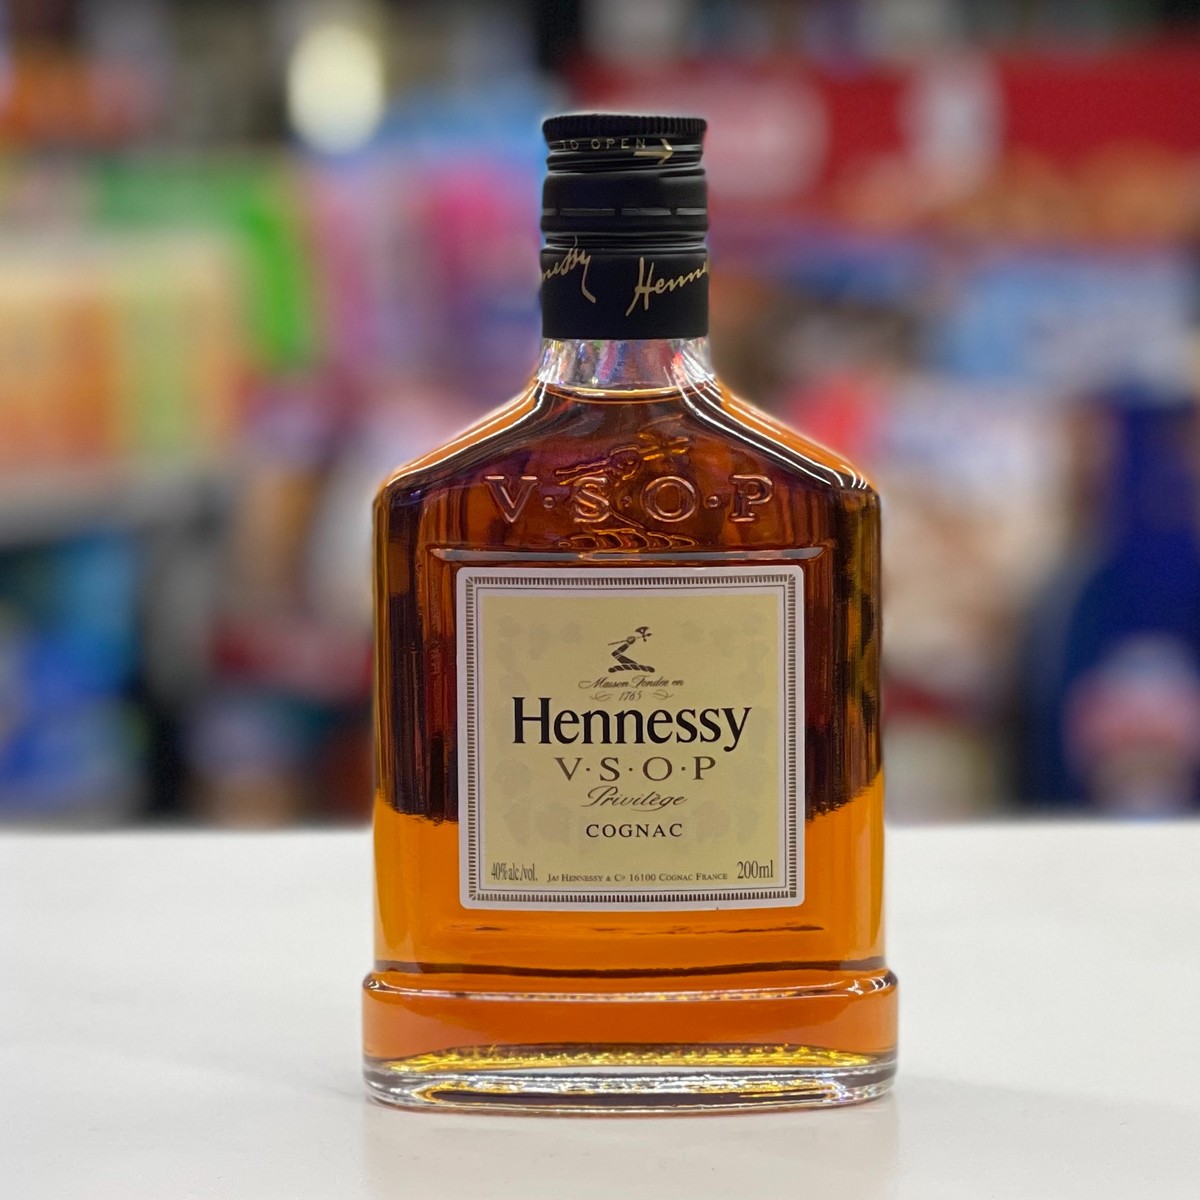 Hennessy Cognac Vsop Privilege - 200 ml bottle